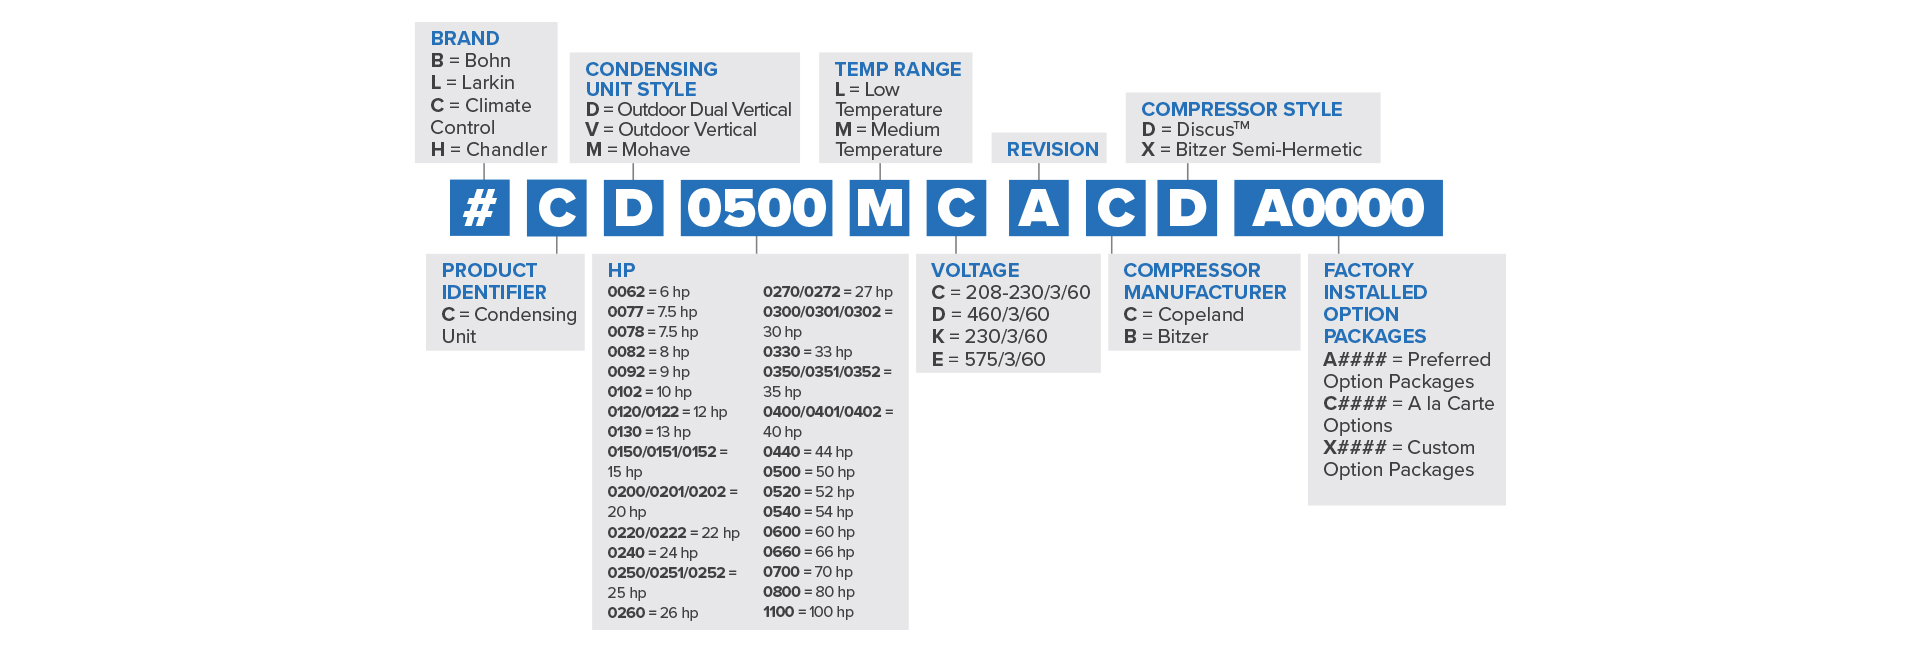 24 - 100 HP Dual Vertical Air Discharge Nomenclature